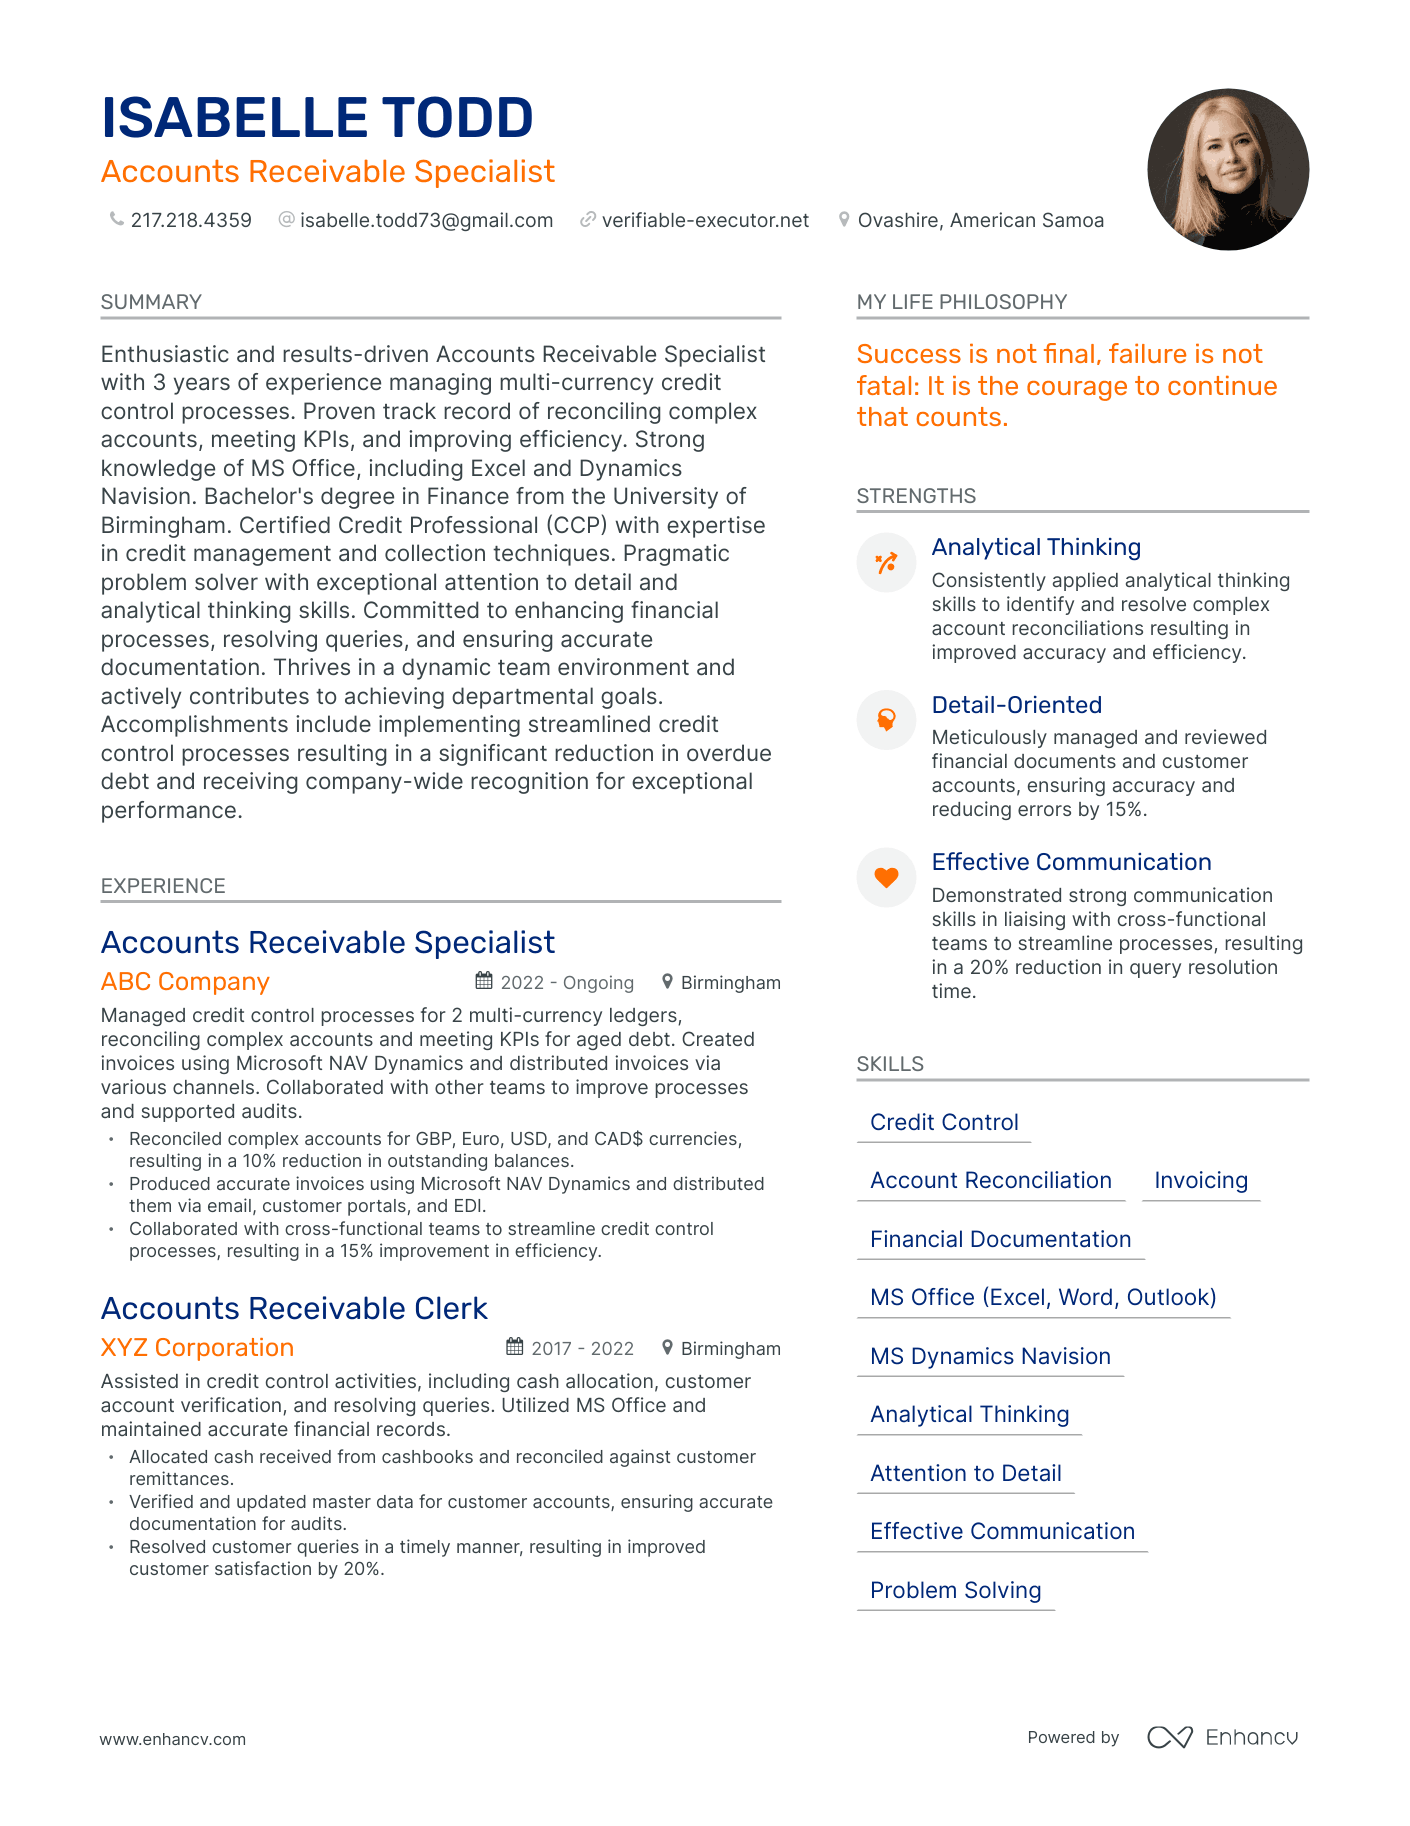 Accounts Receivable Specialist resume example